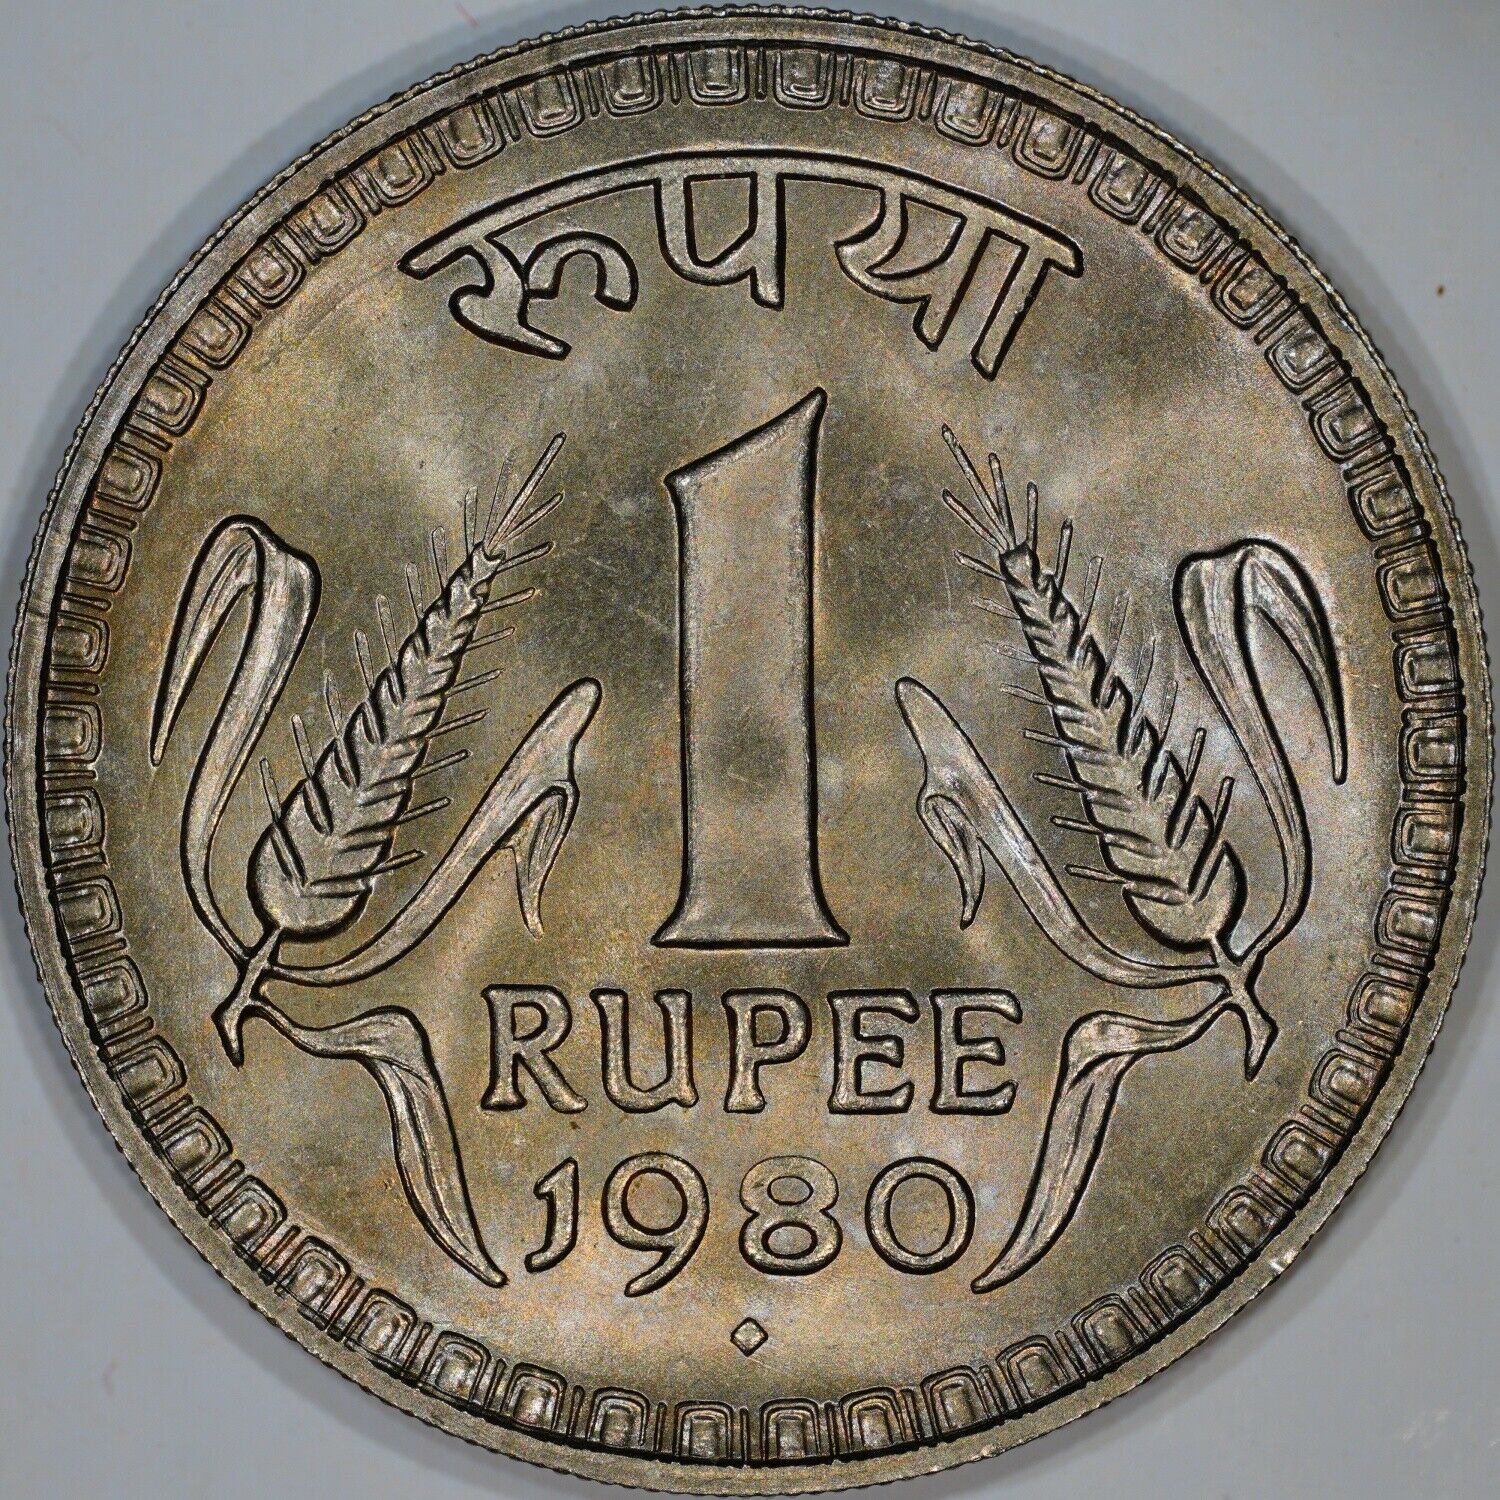 India (republic) Rupee 1980 Gem Uncirculated